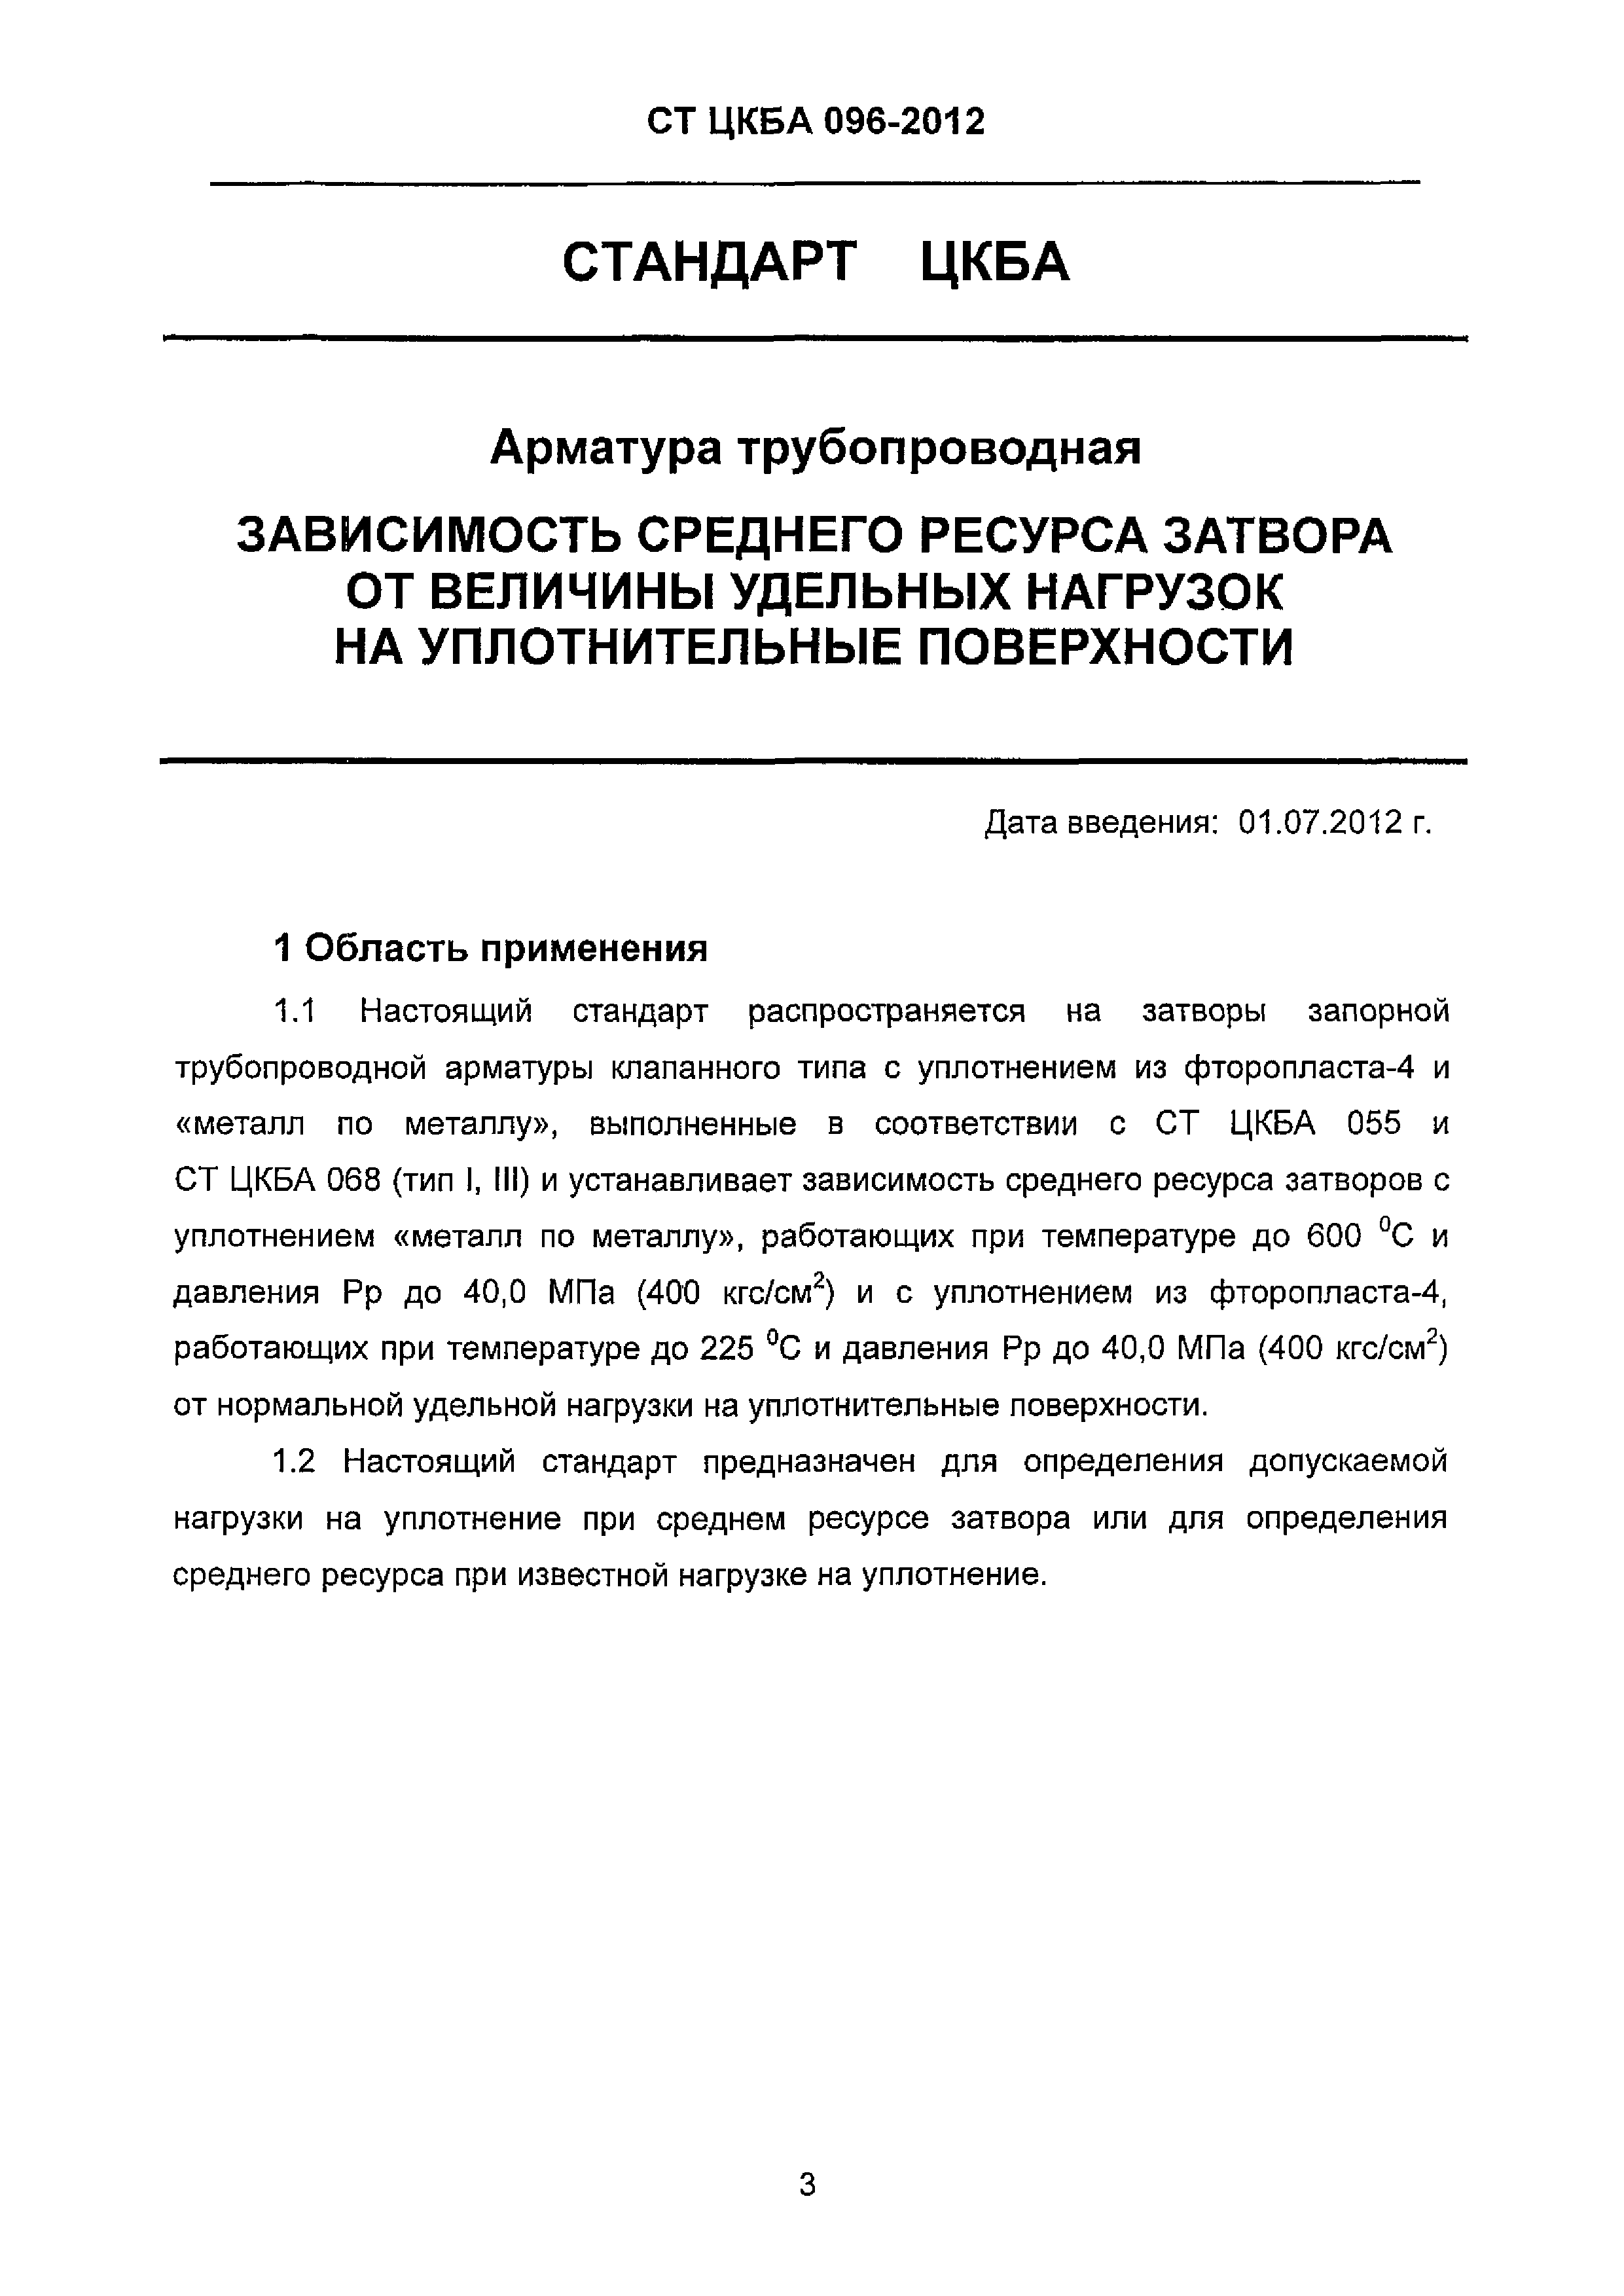 СТ ЦКБА 096-2012